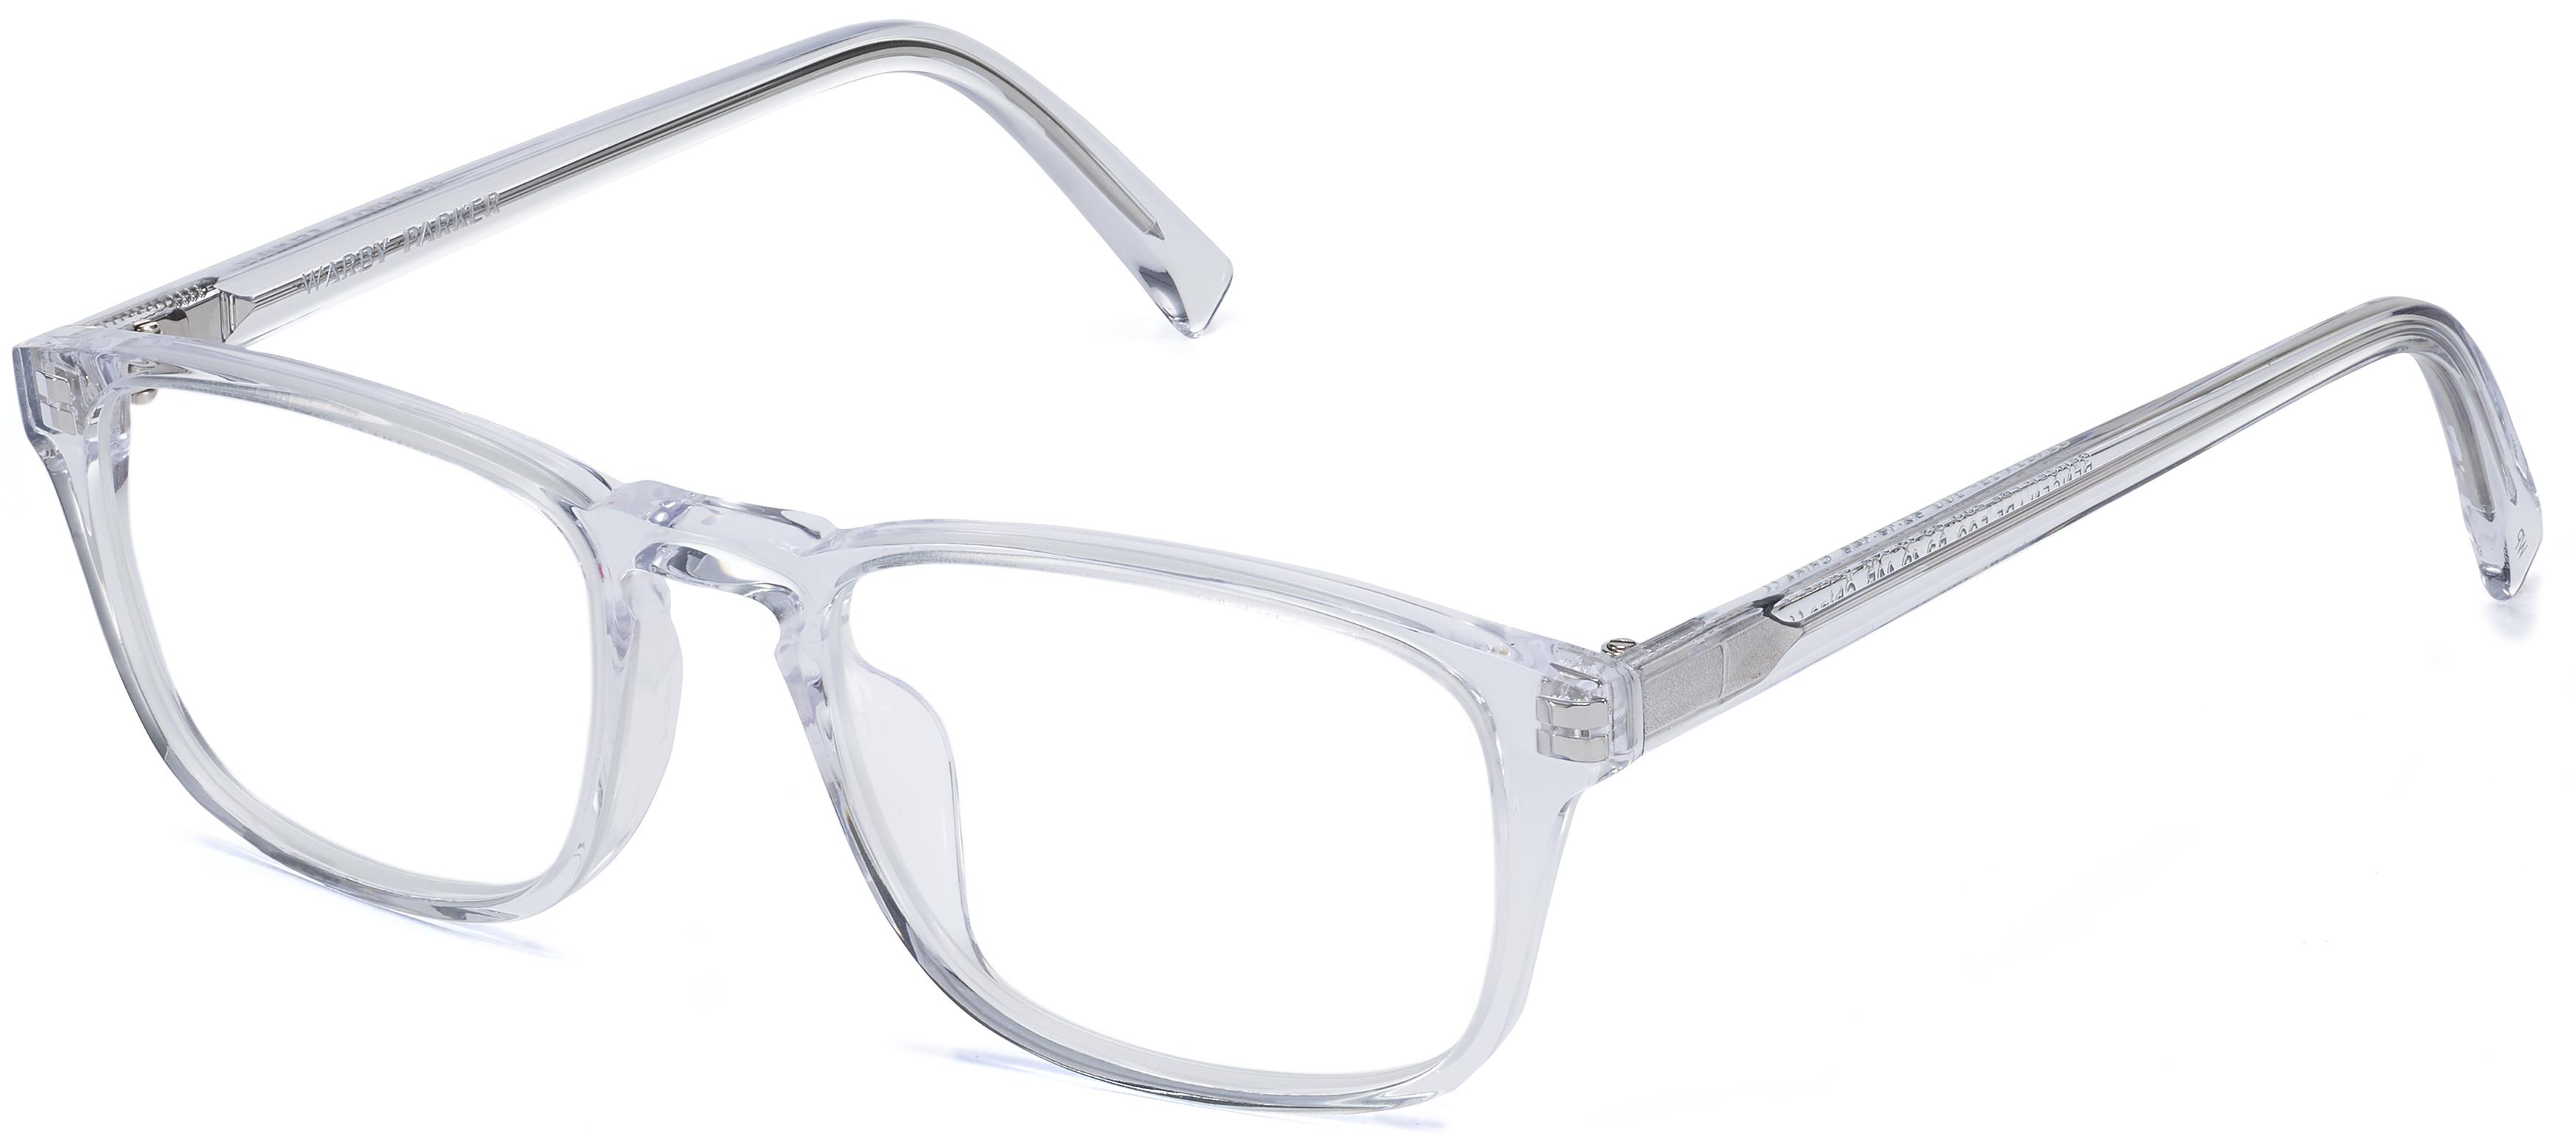 Bensen Low Bridge Fit Eyeglasses in Crystal | Warby Parker